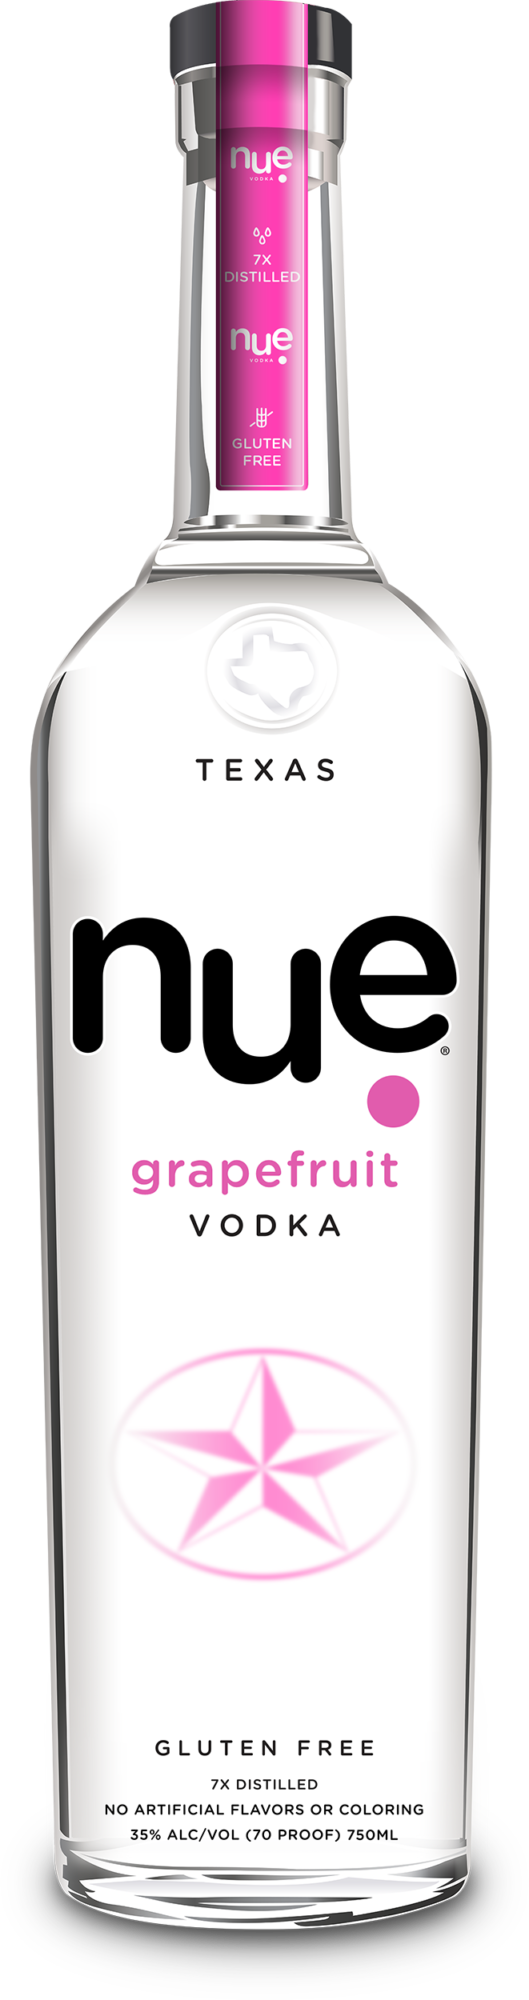 Nue Vodka Grapefruit | Gluten Free